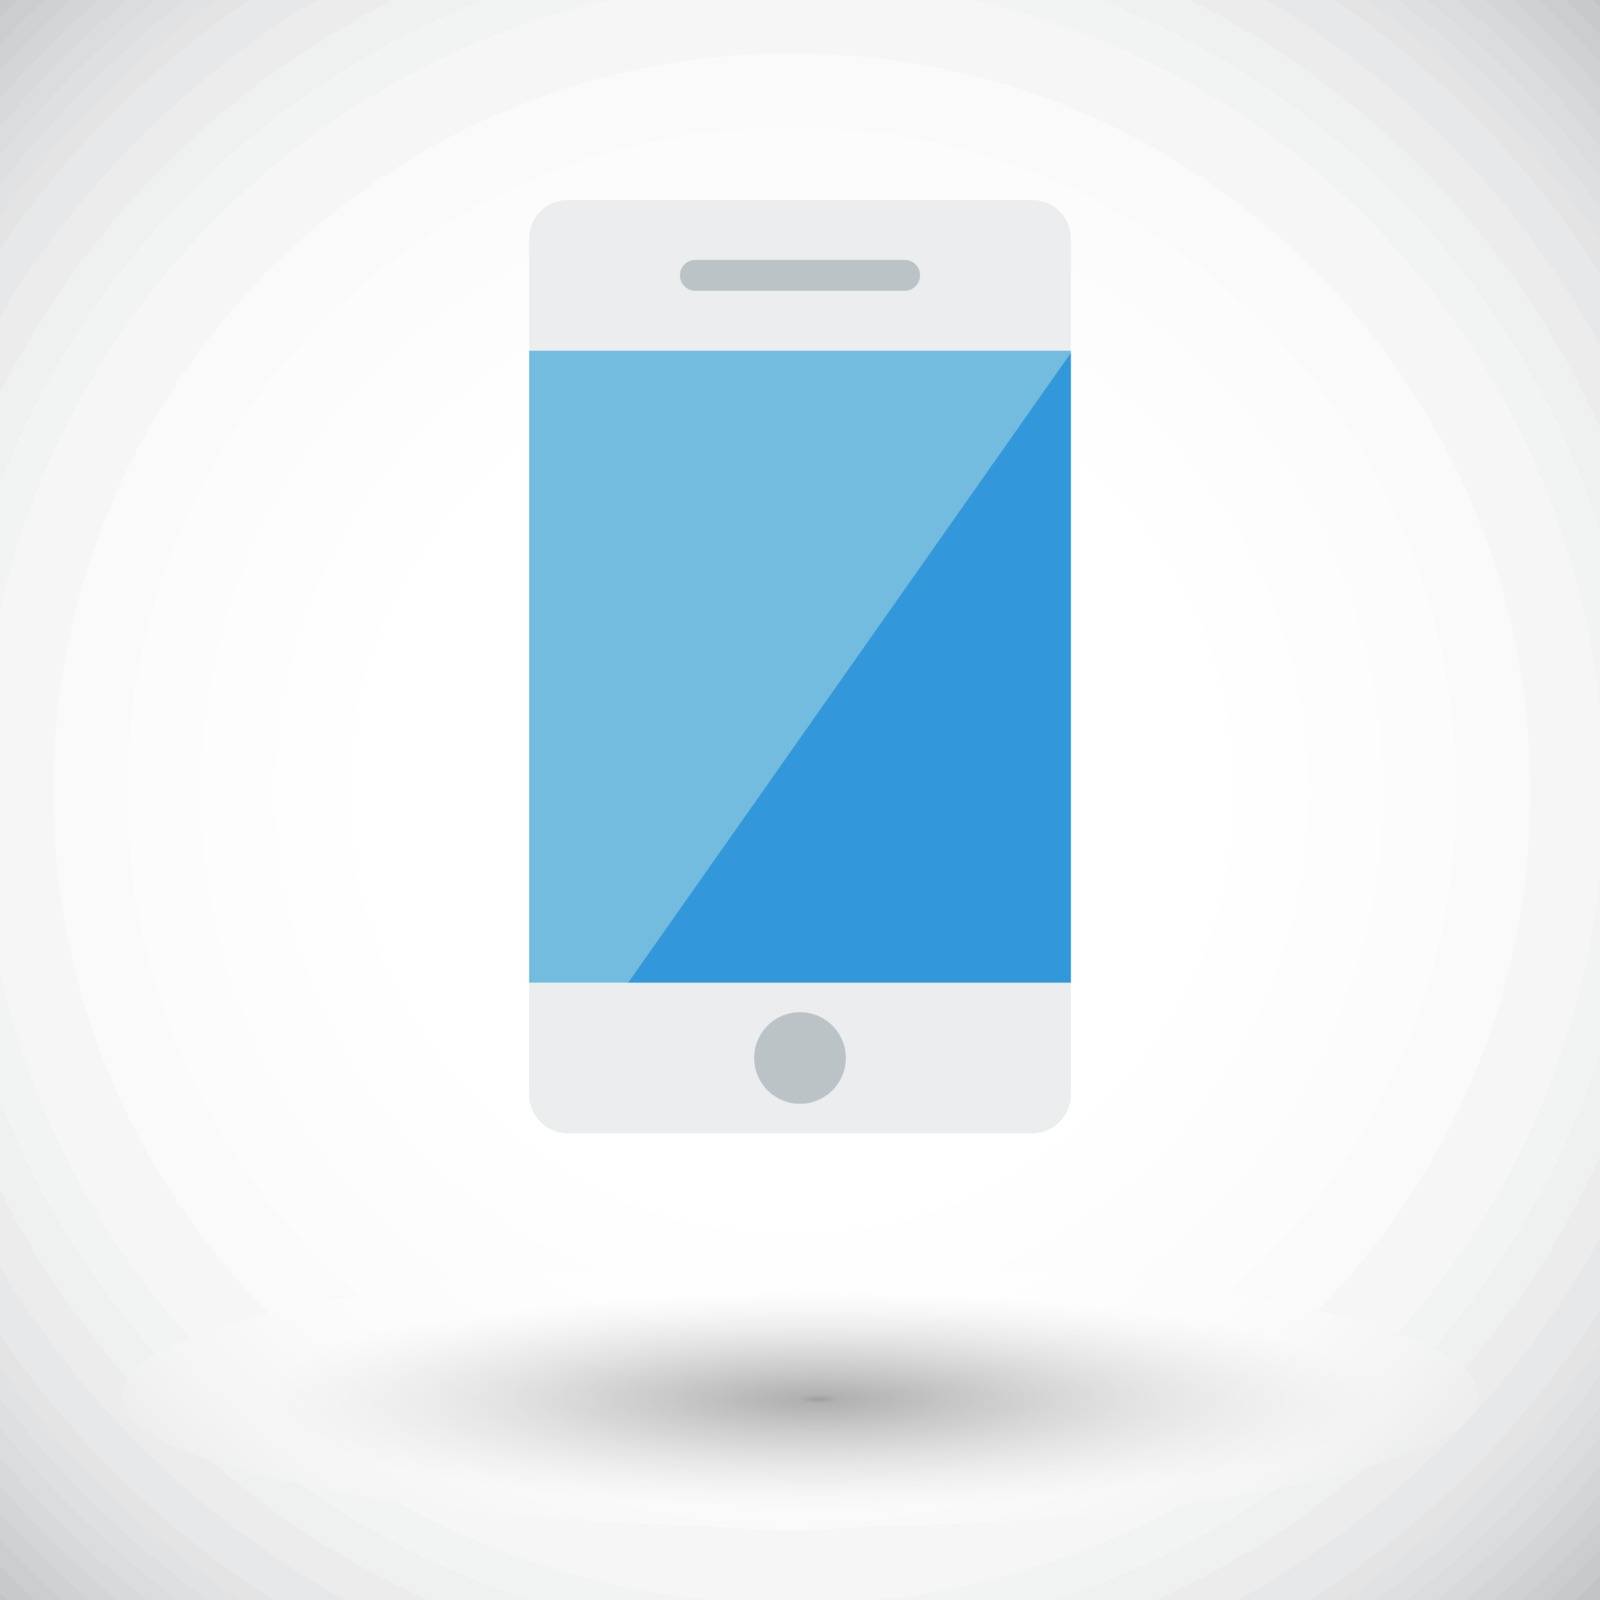 Smartphone. Single flat icon on white background. Vector illustration.